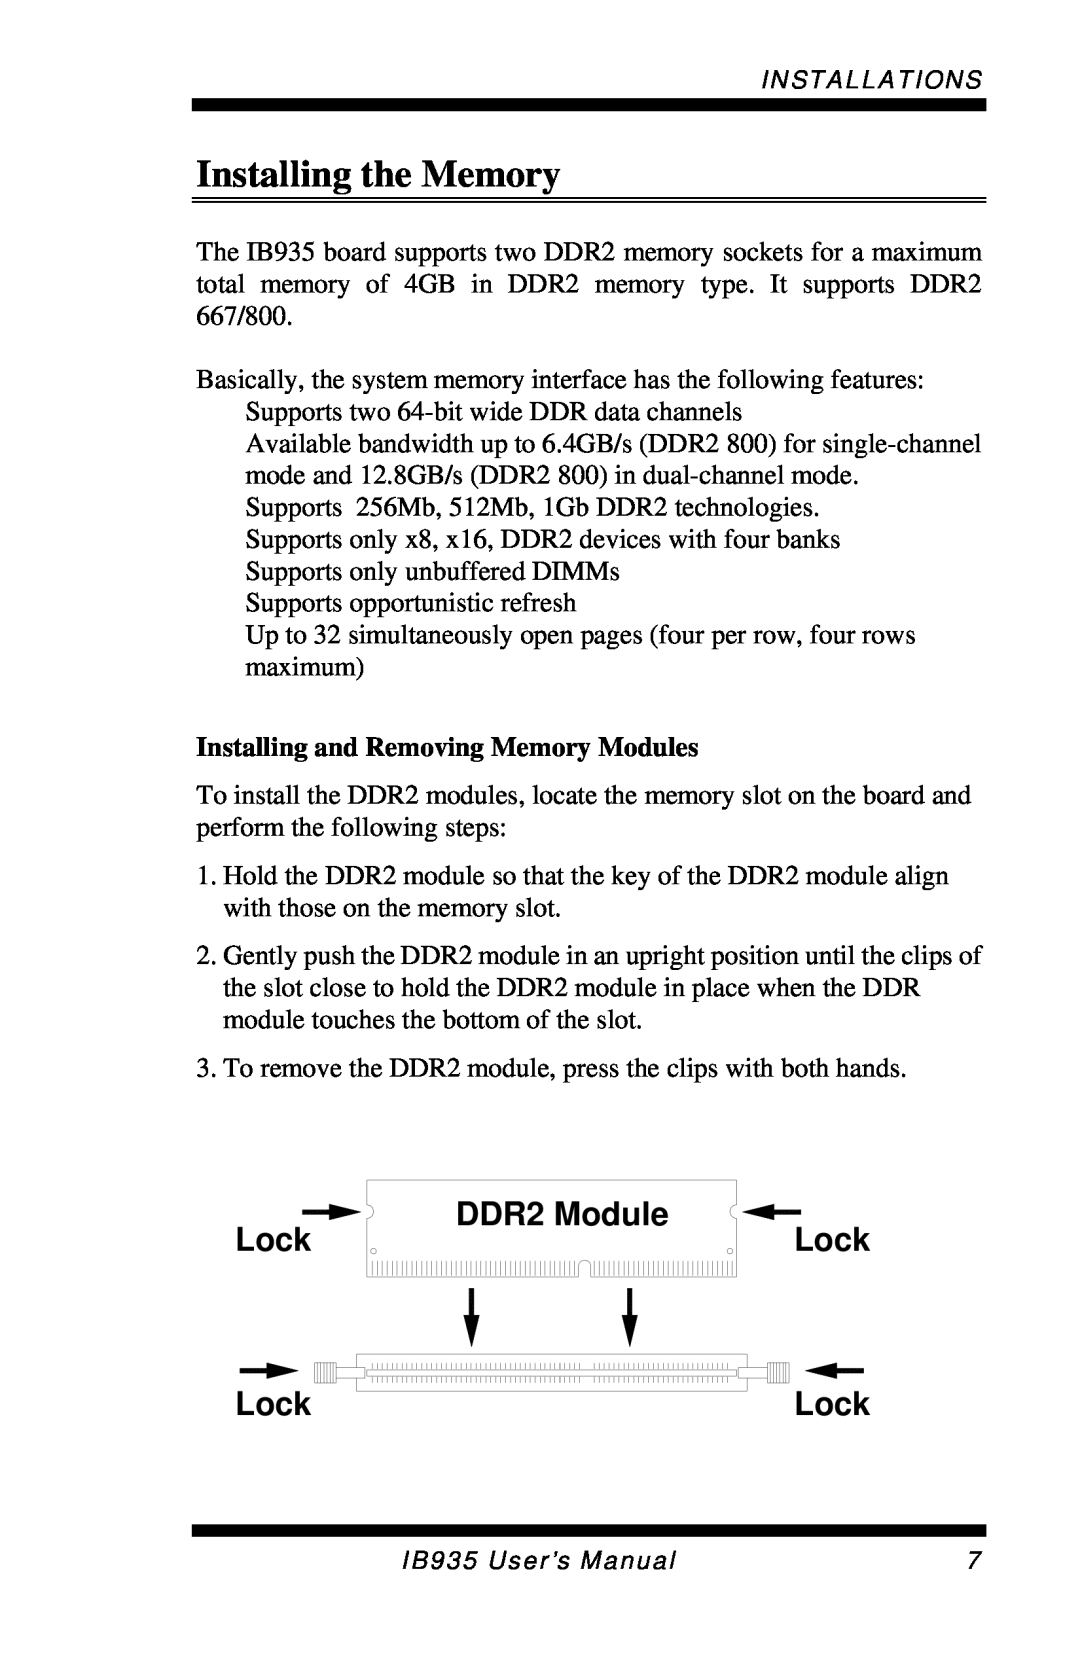 Intel IB935 user manual Installing the Memory, DDR2 Module Lock 